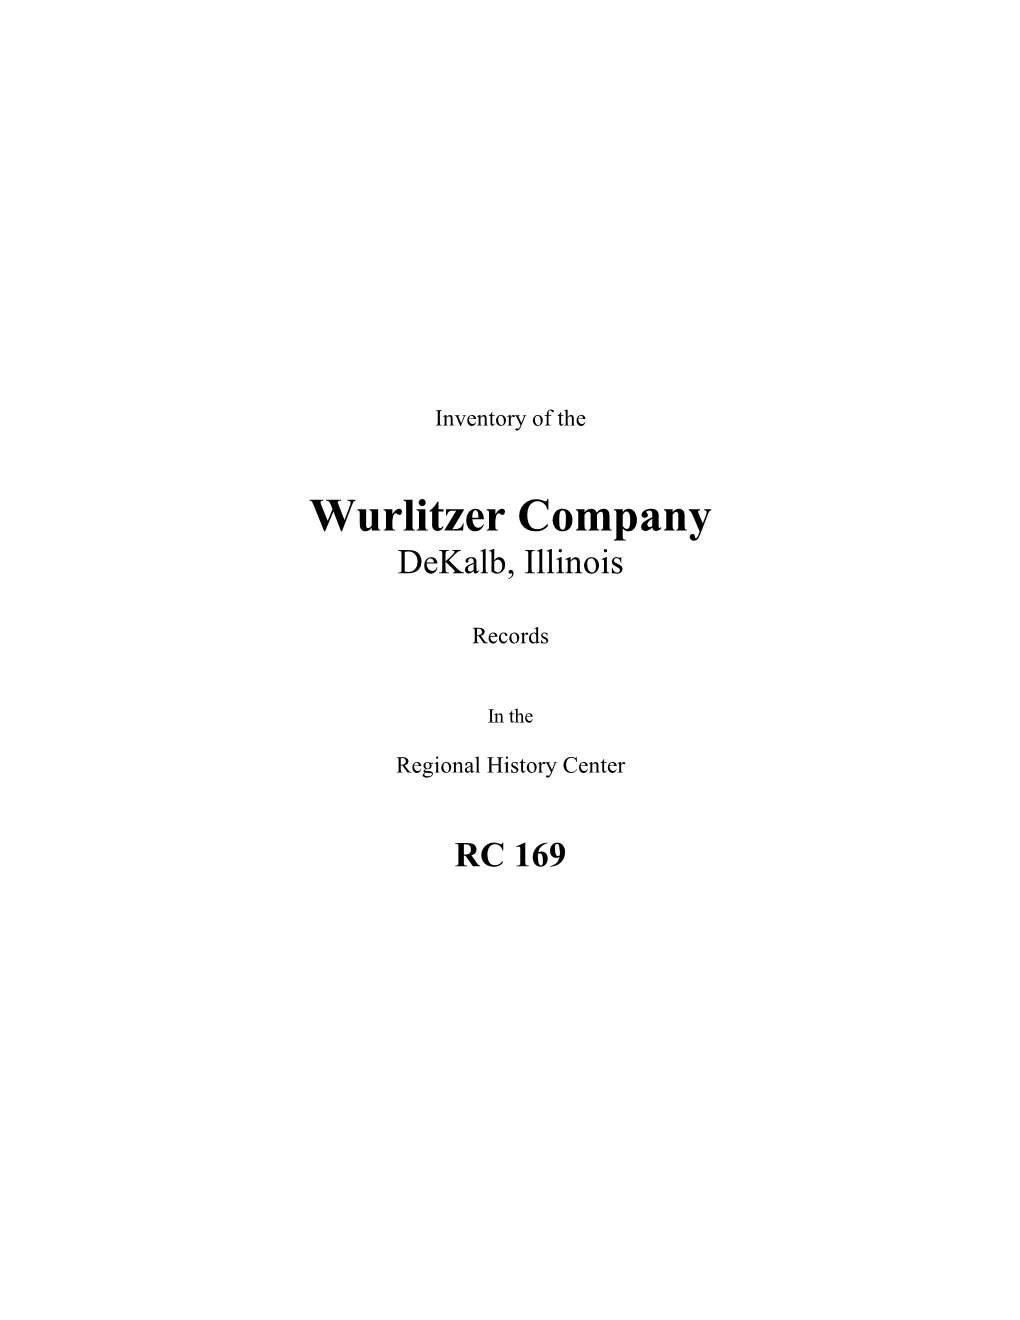 Wurlitzer Company Dekalb, Illinois